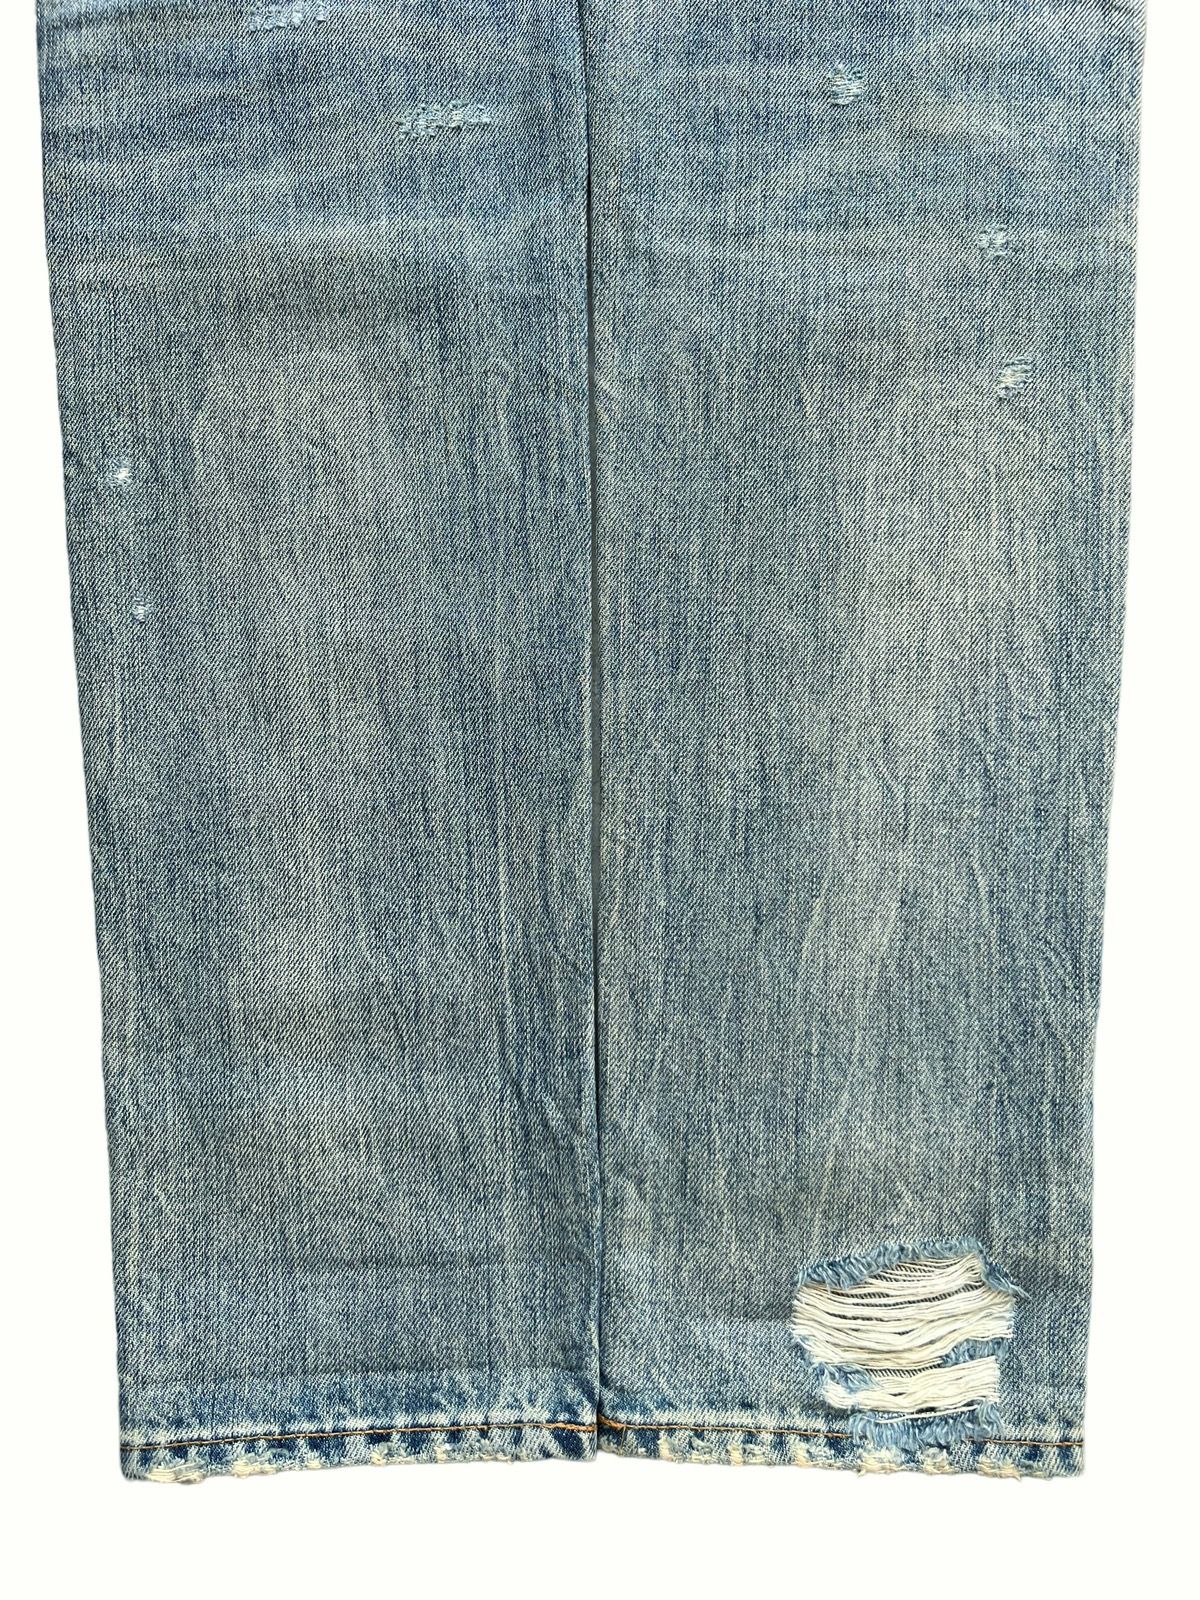 Ralph Lauren Rusty Ripped Distressed Denim Jeans 28x29 - 6